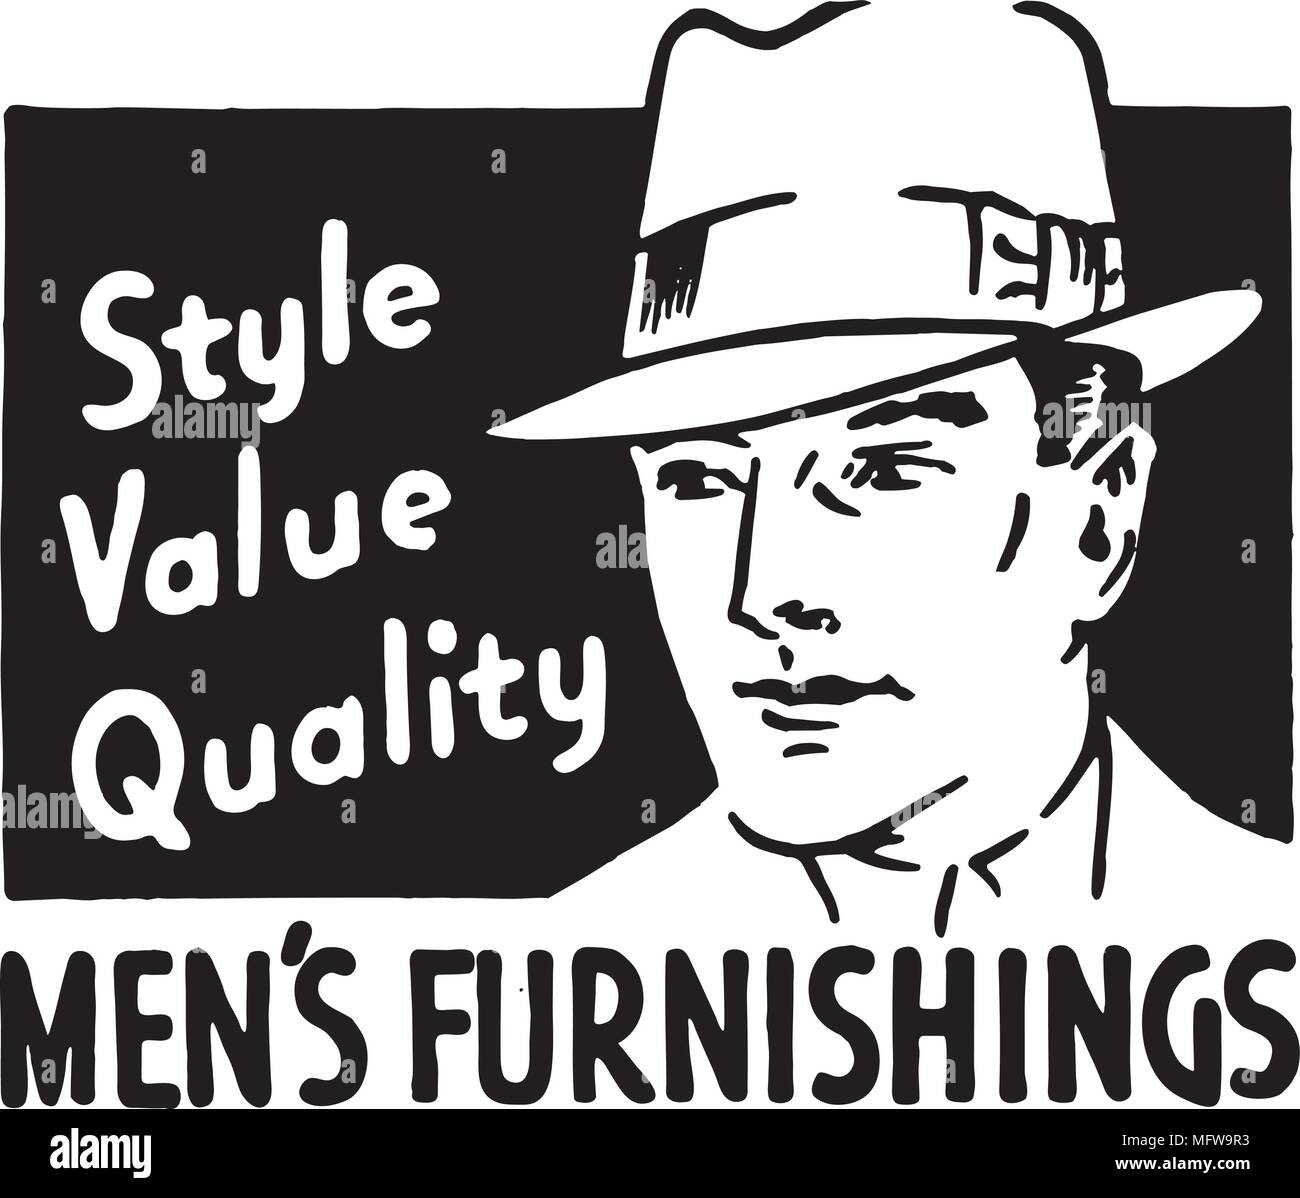 Mens Furnishings - Retro Ad Art Banner Stock Vector